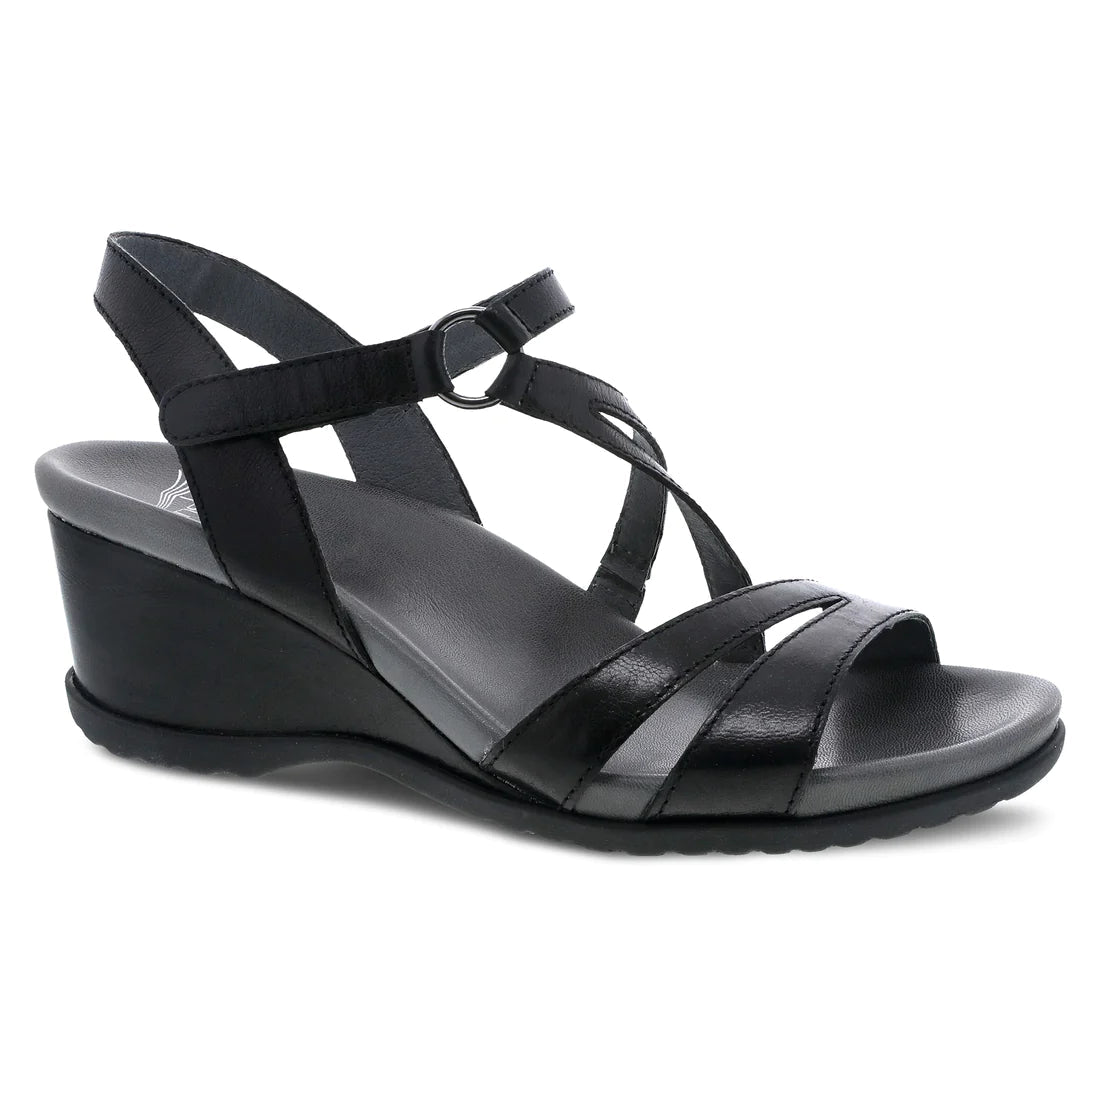 Dansko Women's Addyson Wedge Sandal - Black